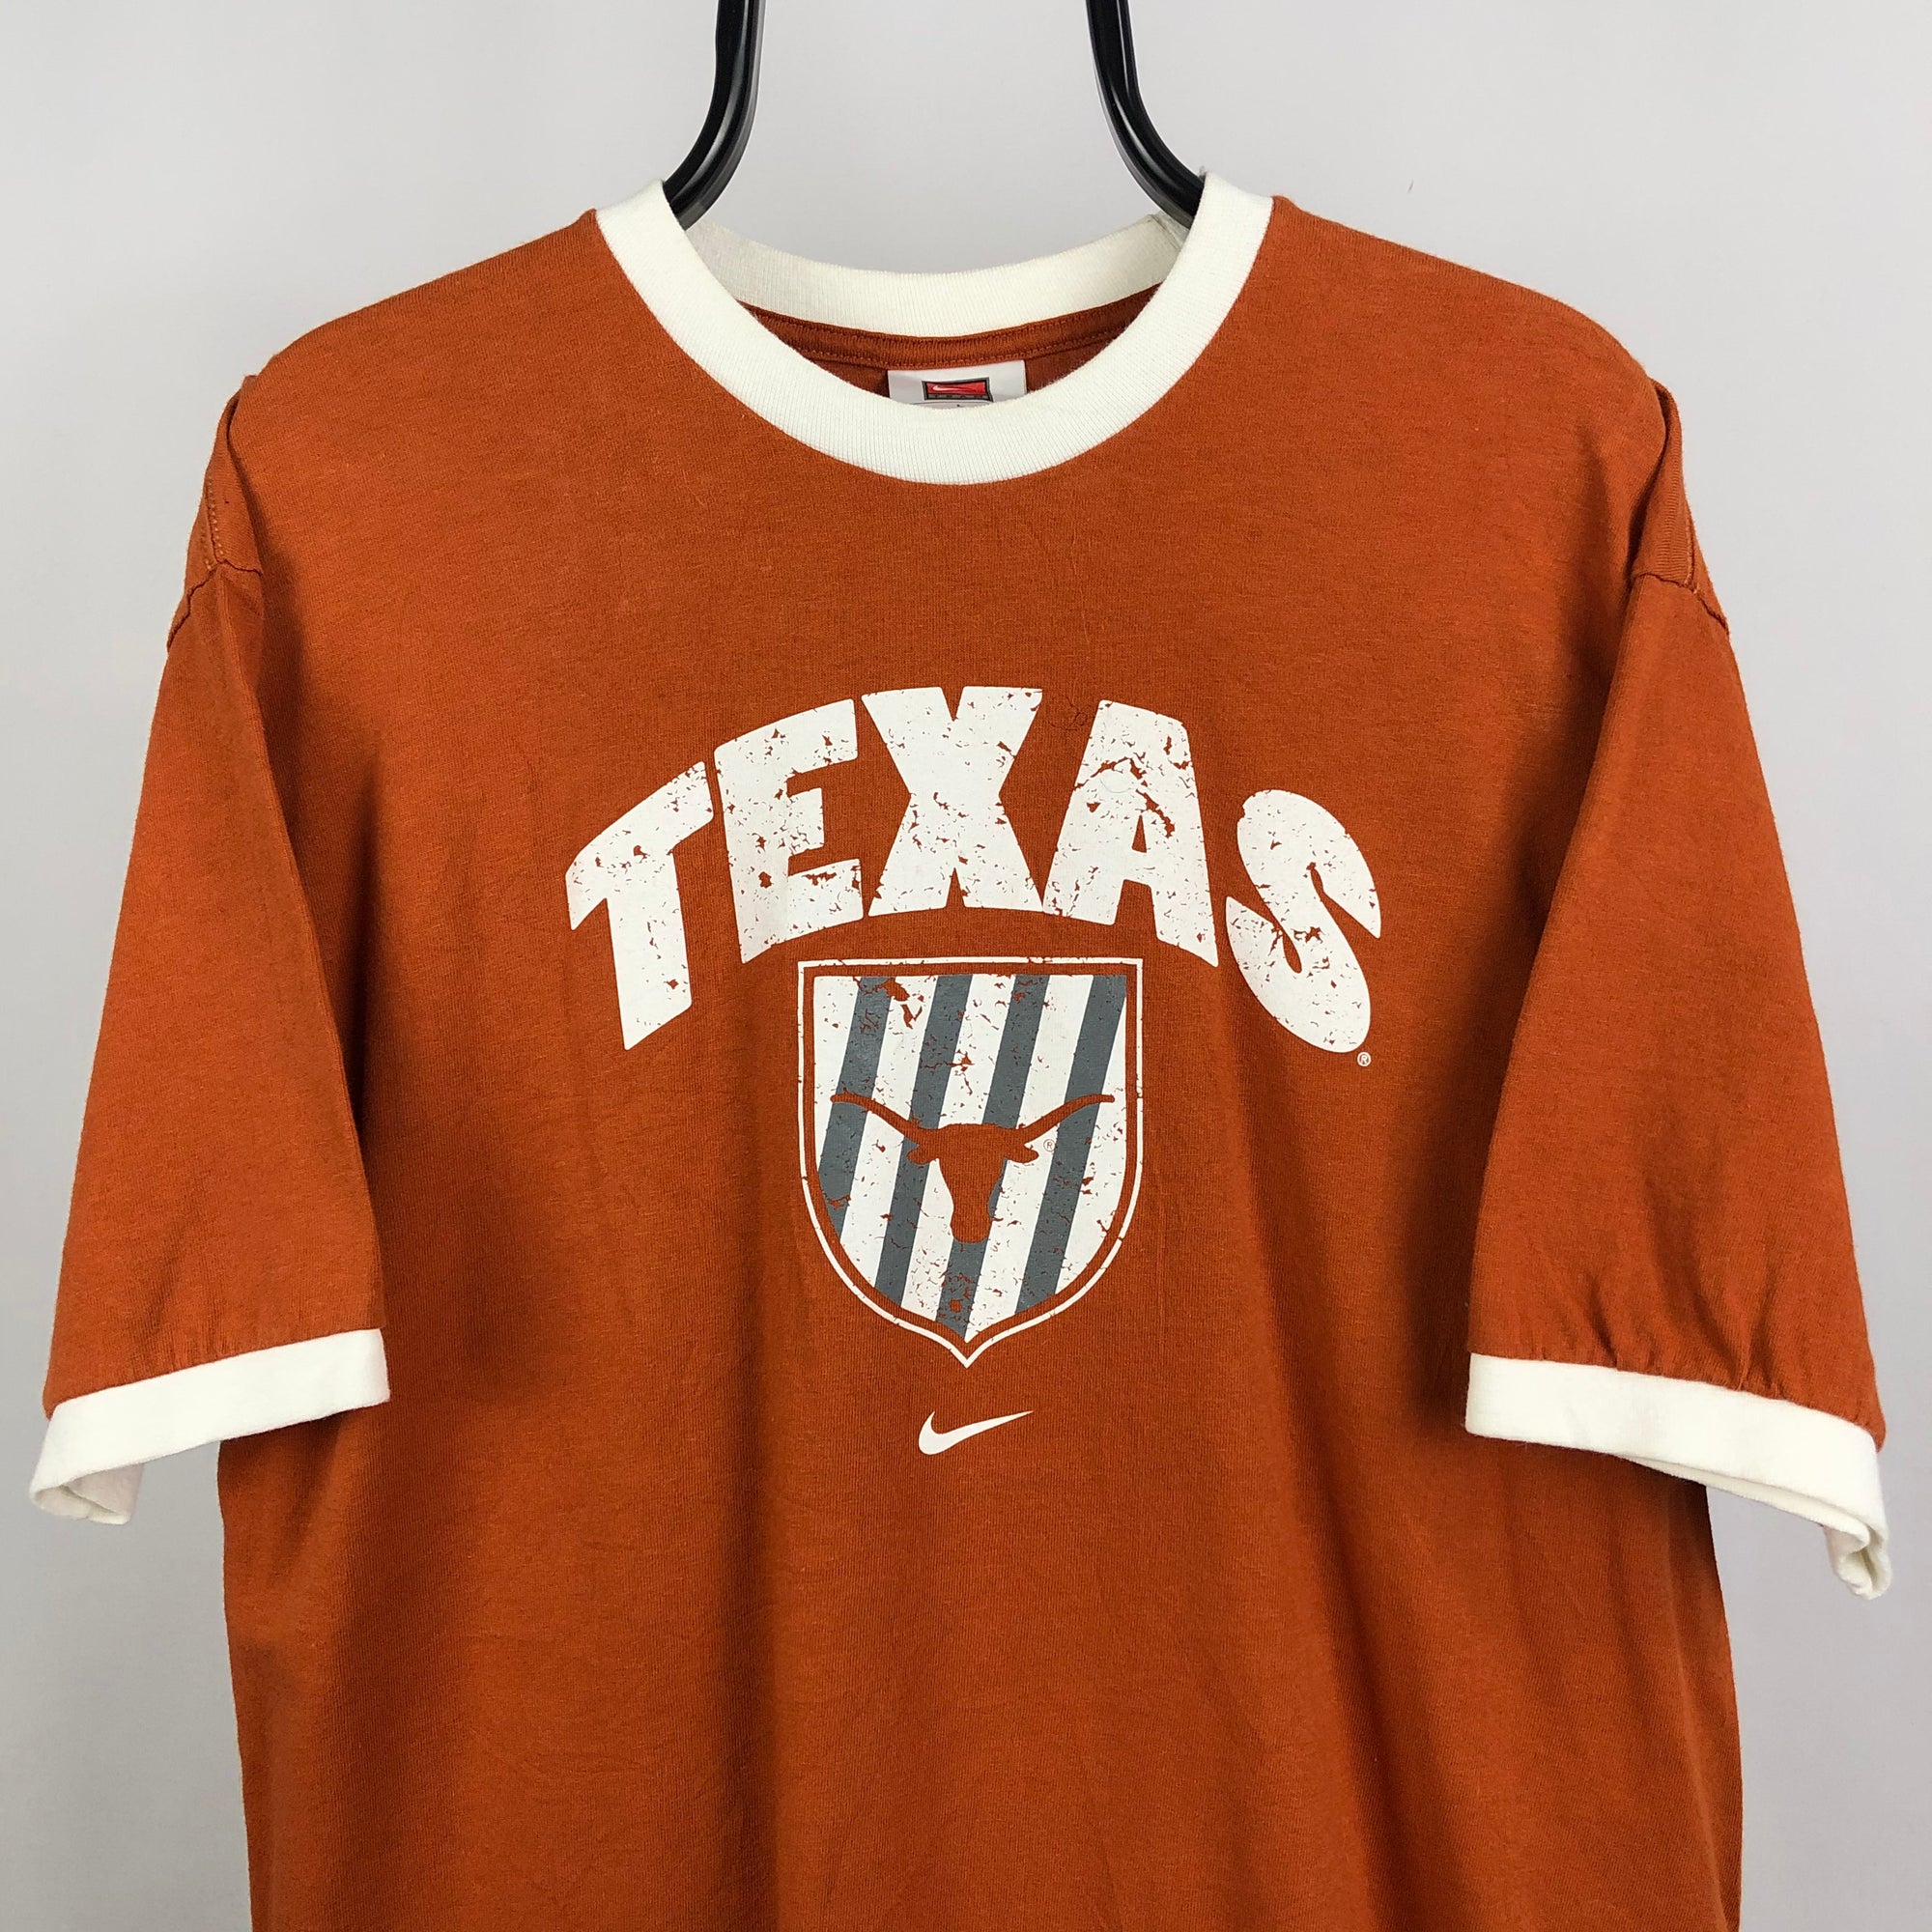 Vintage Nike Texas Tee - Men's Large/Women's XL